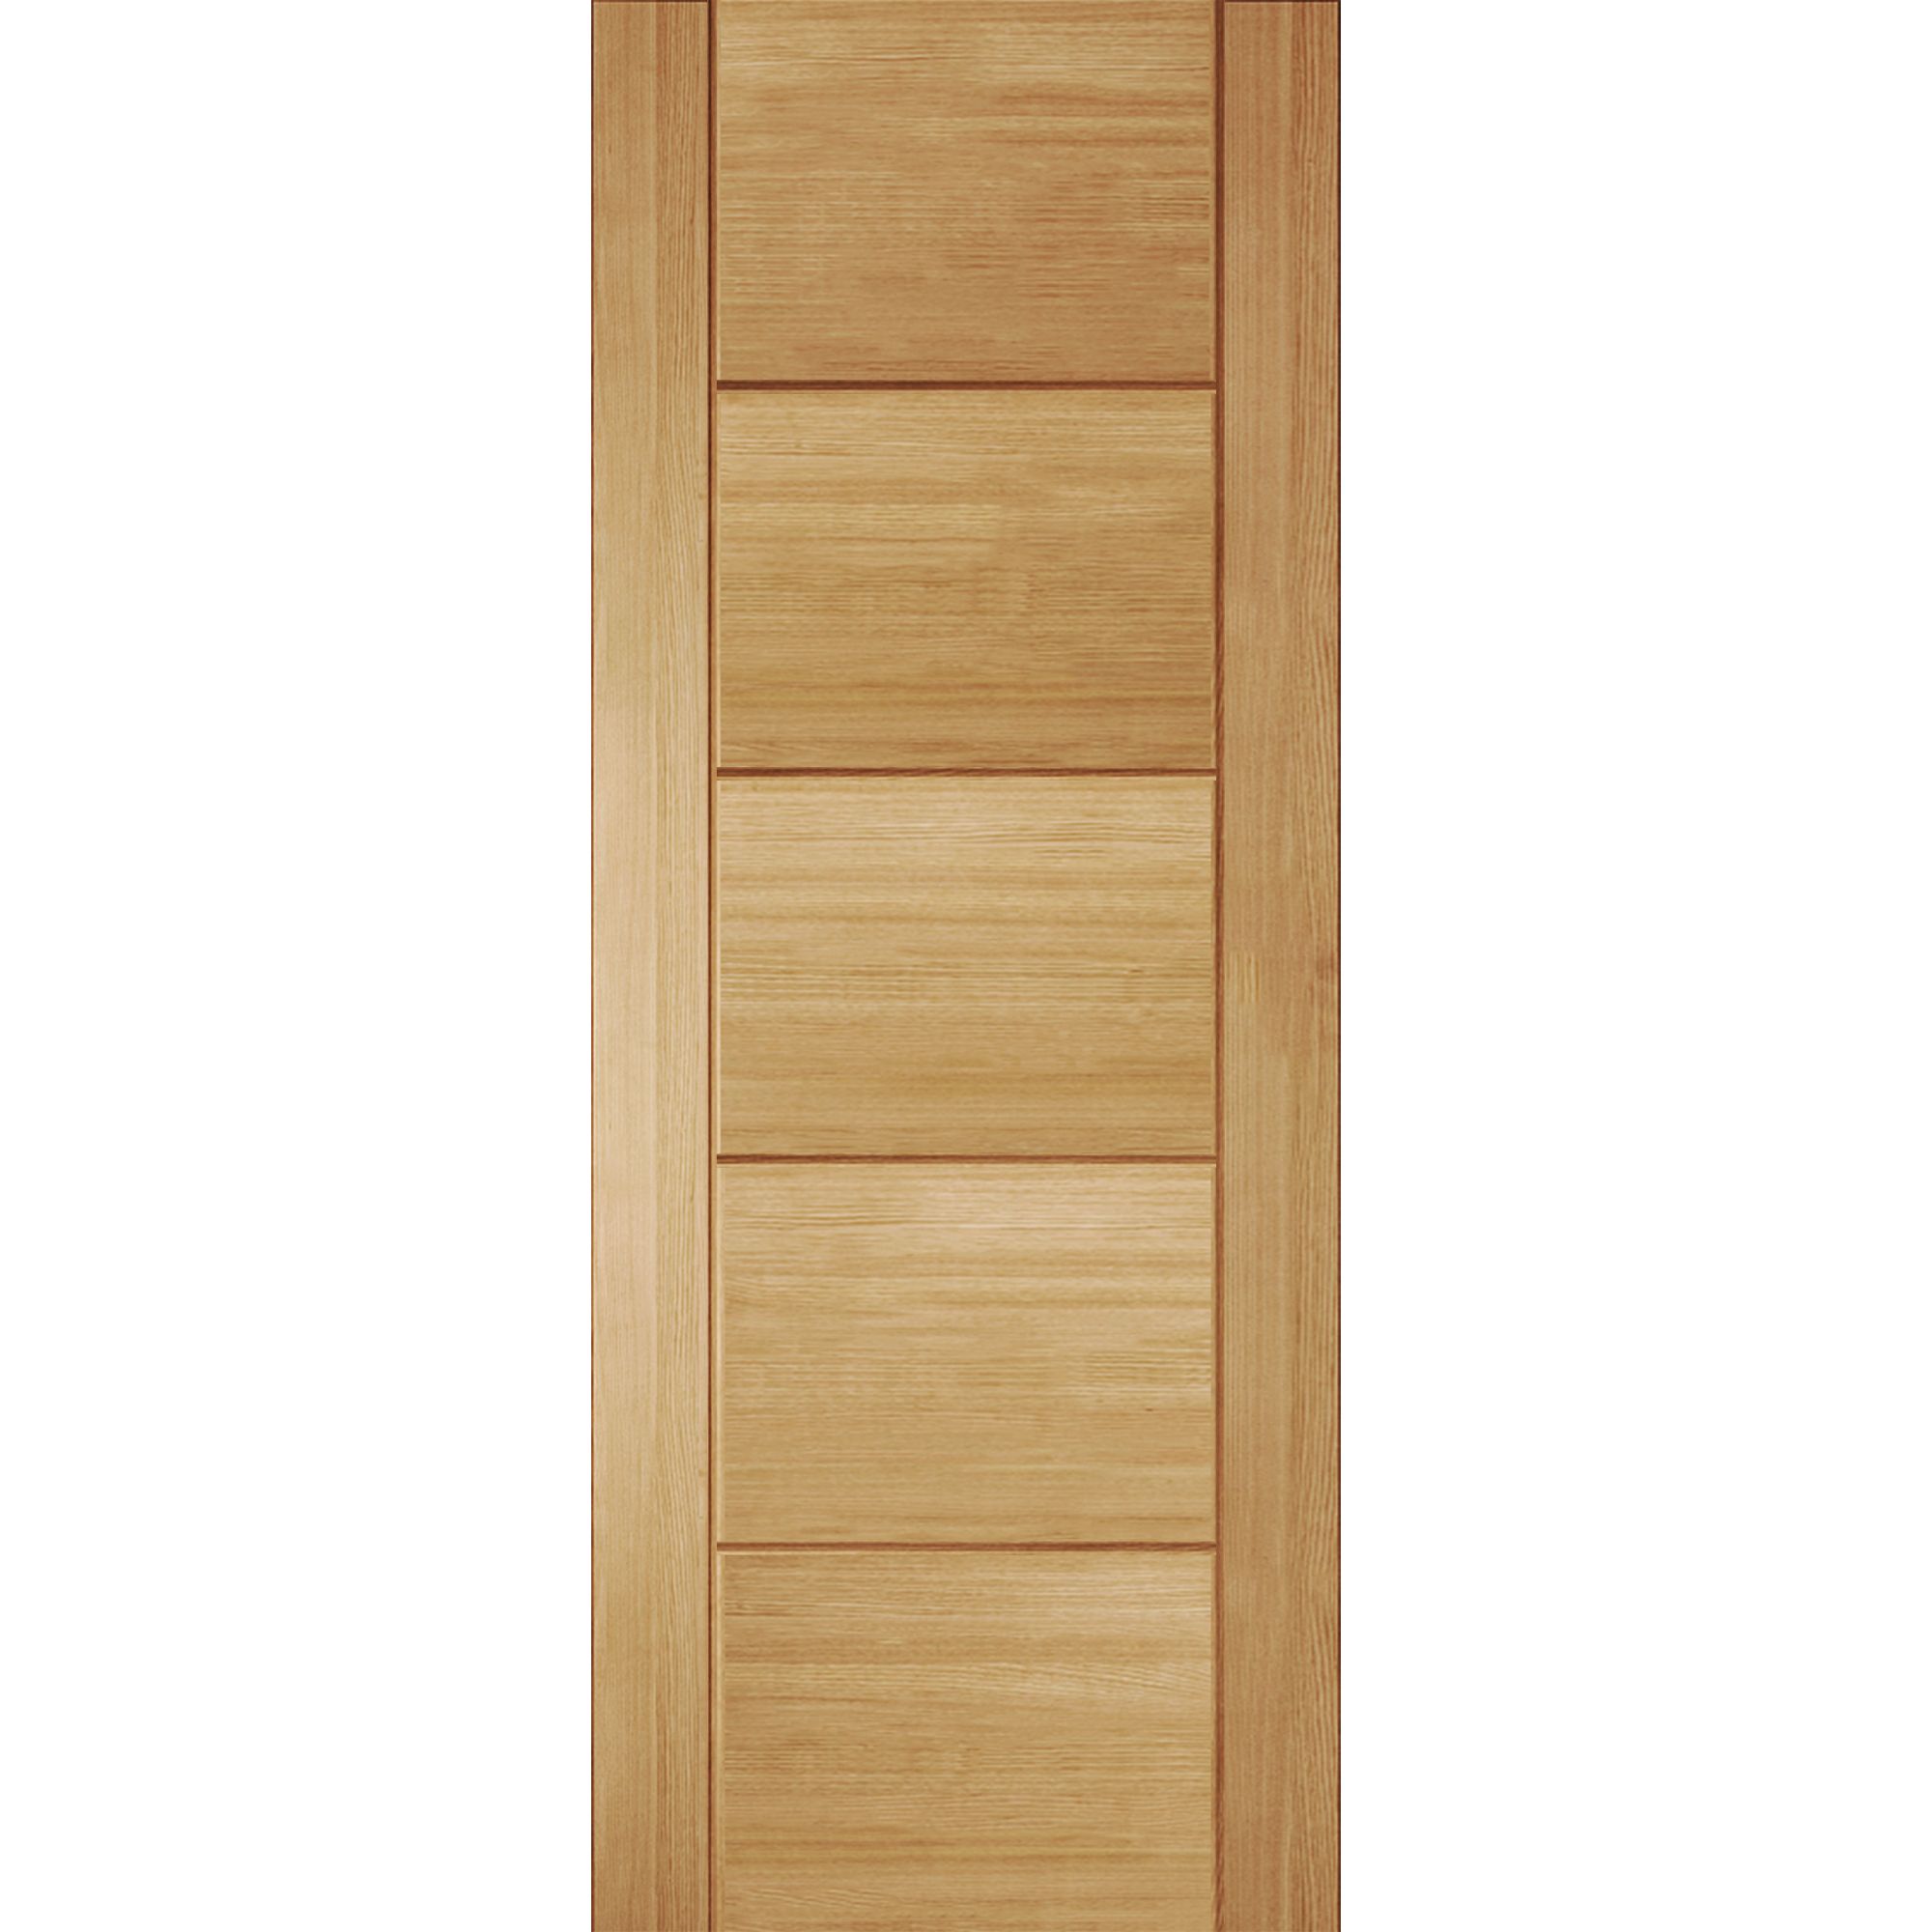 Fully finished Linear Contemporary White oak veneer Internal Door, (H)1981mm (W)762mm (T)35mm